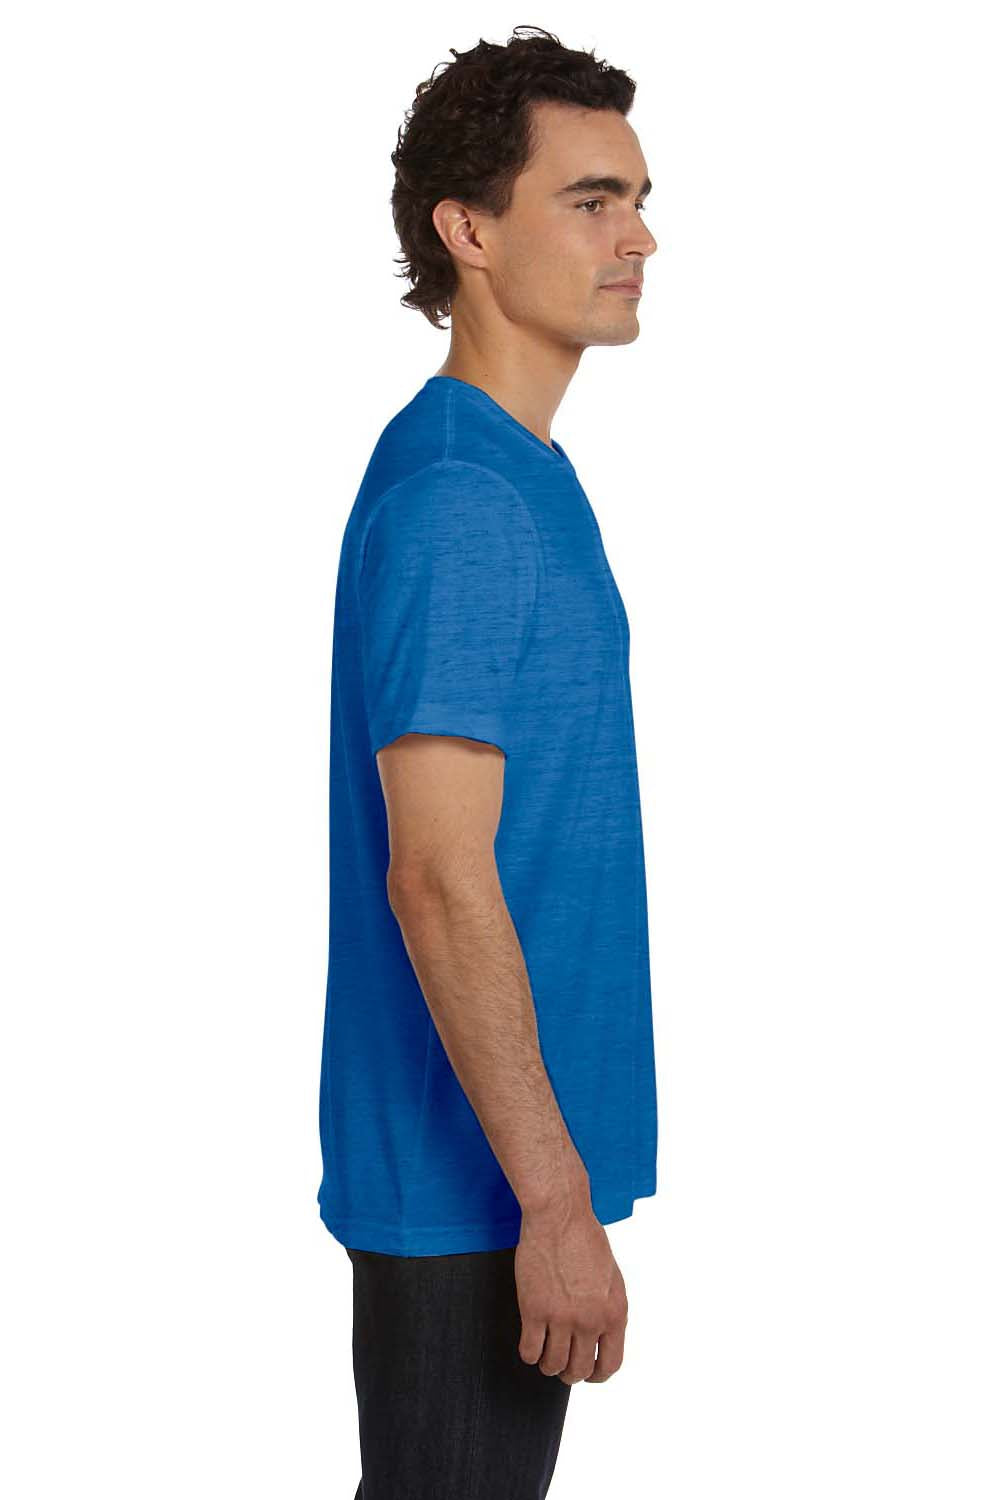 Bella + Canvas 3650 Mens Short Sleeve Crewneck T-Shirt Royal Blue Marble Side